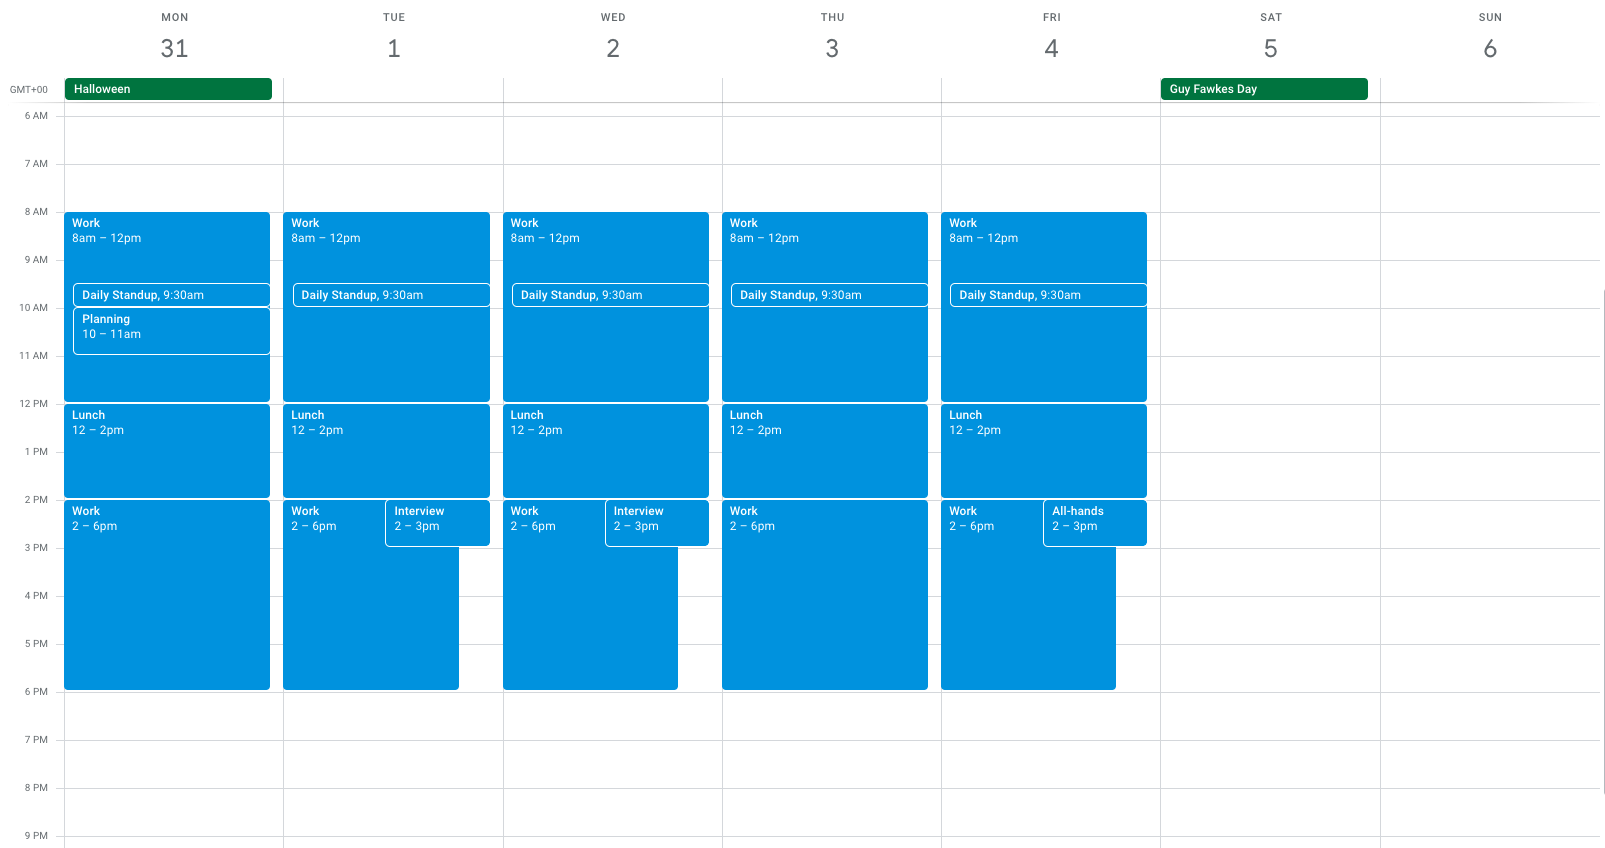 Here is my schedule